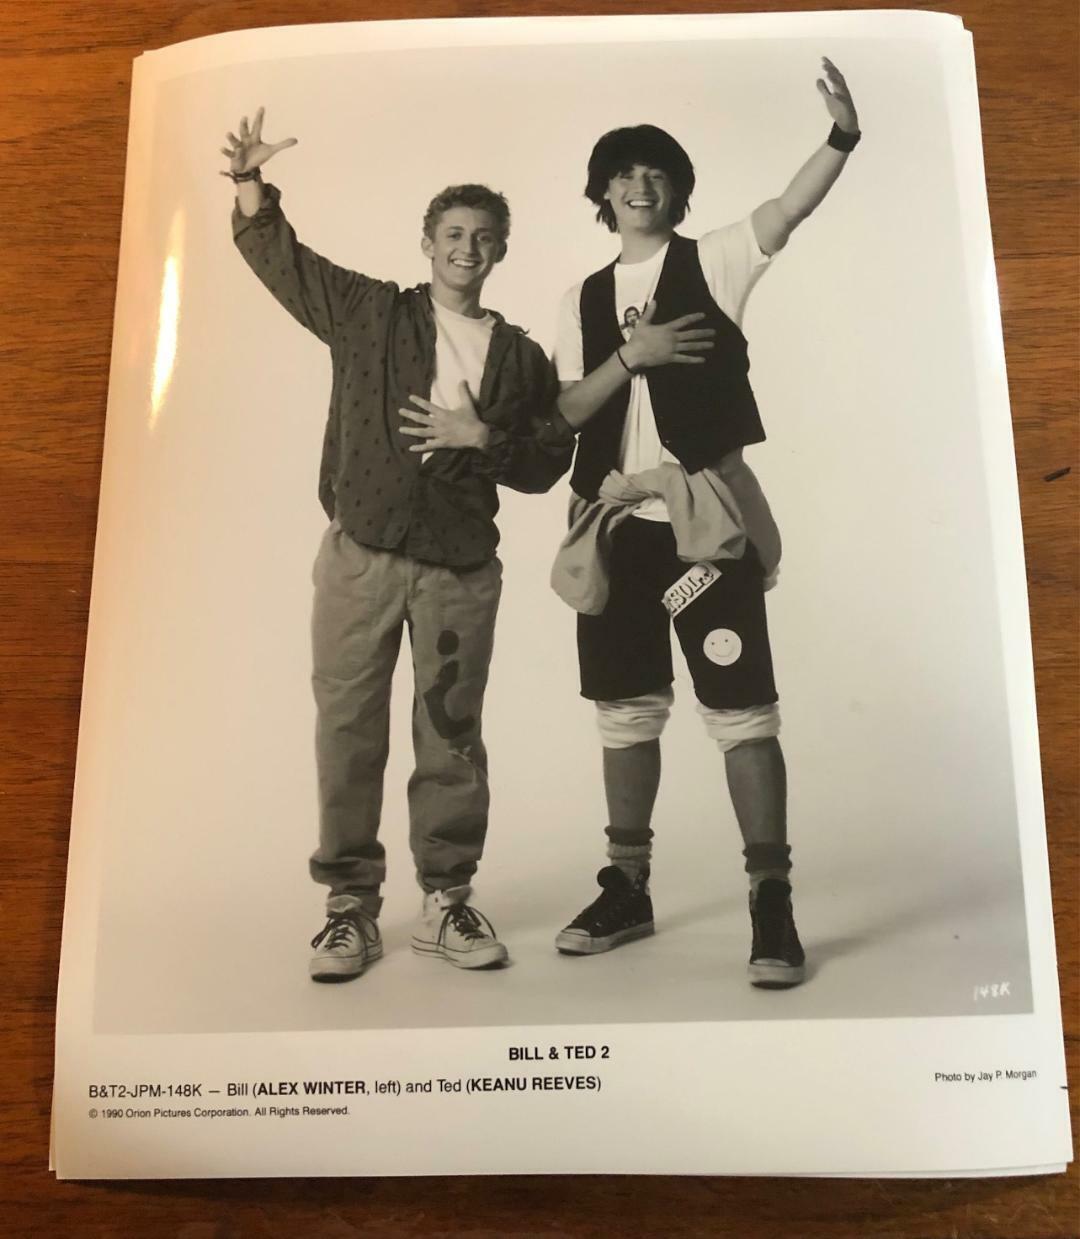 Bill & Ted 2 - 1990 Original Movie Press Photo Publicity Still Keanu Reeves